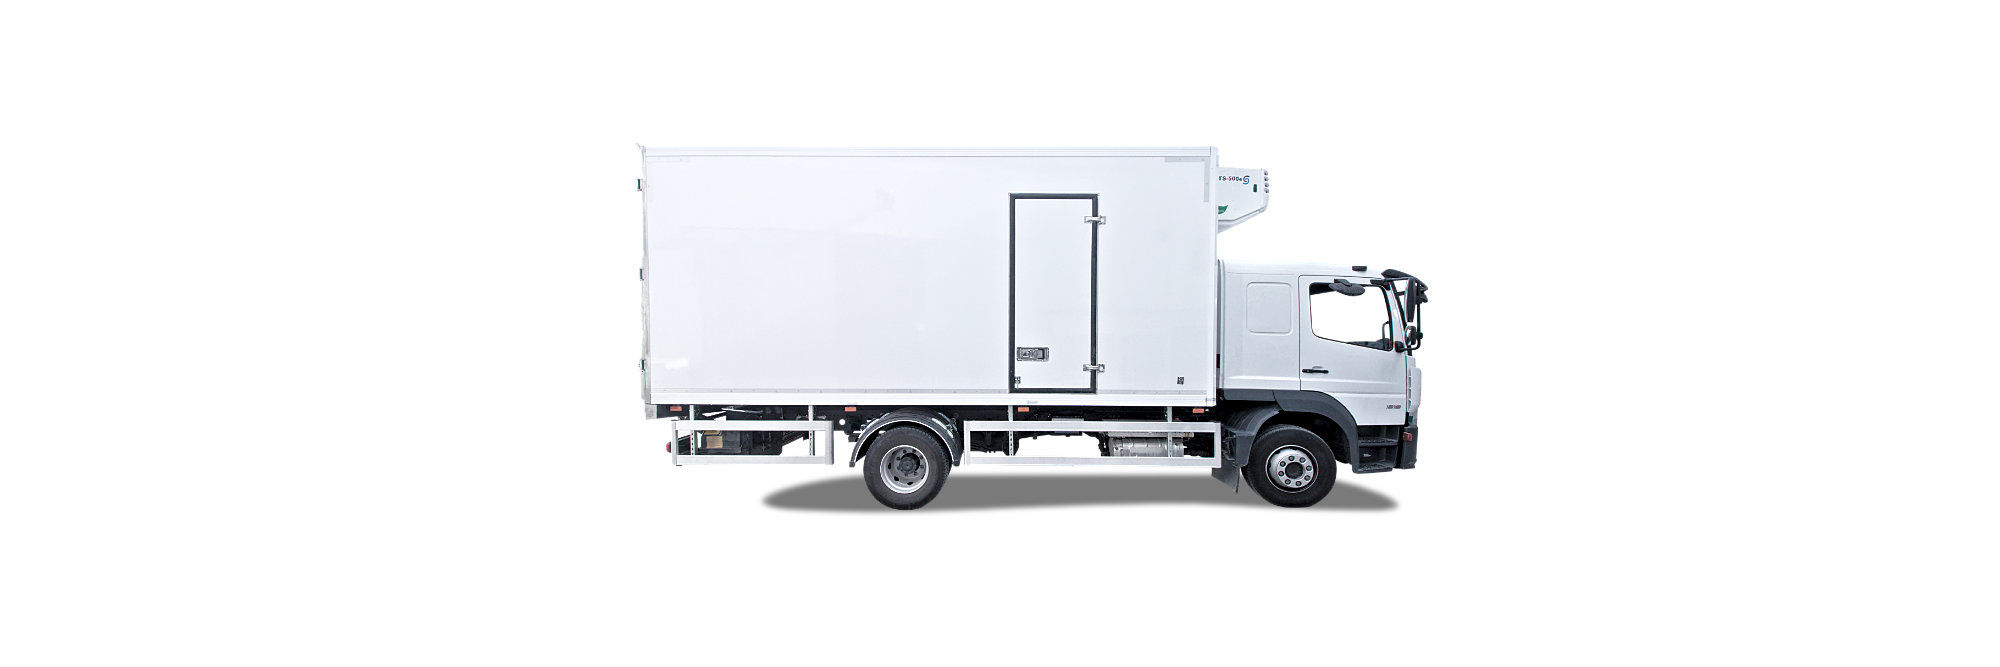 Decopan Commercial Vehicle (Ticari Araç) CTP levha et ve taze gıda treyler, kamyon, kamyonet, van kasa üretimi